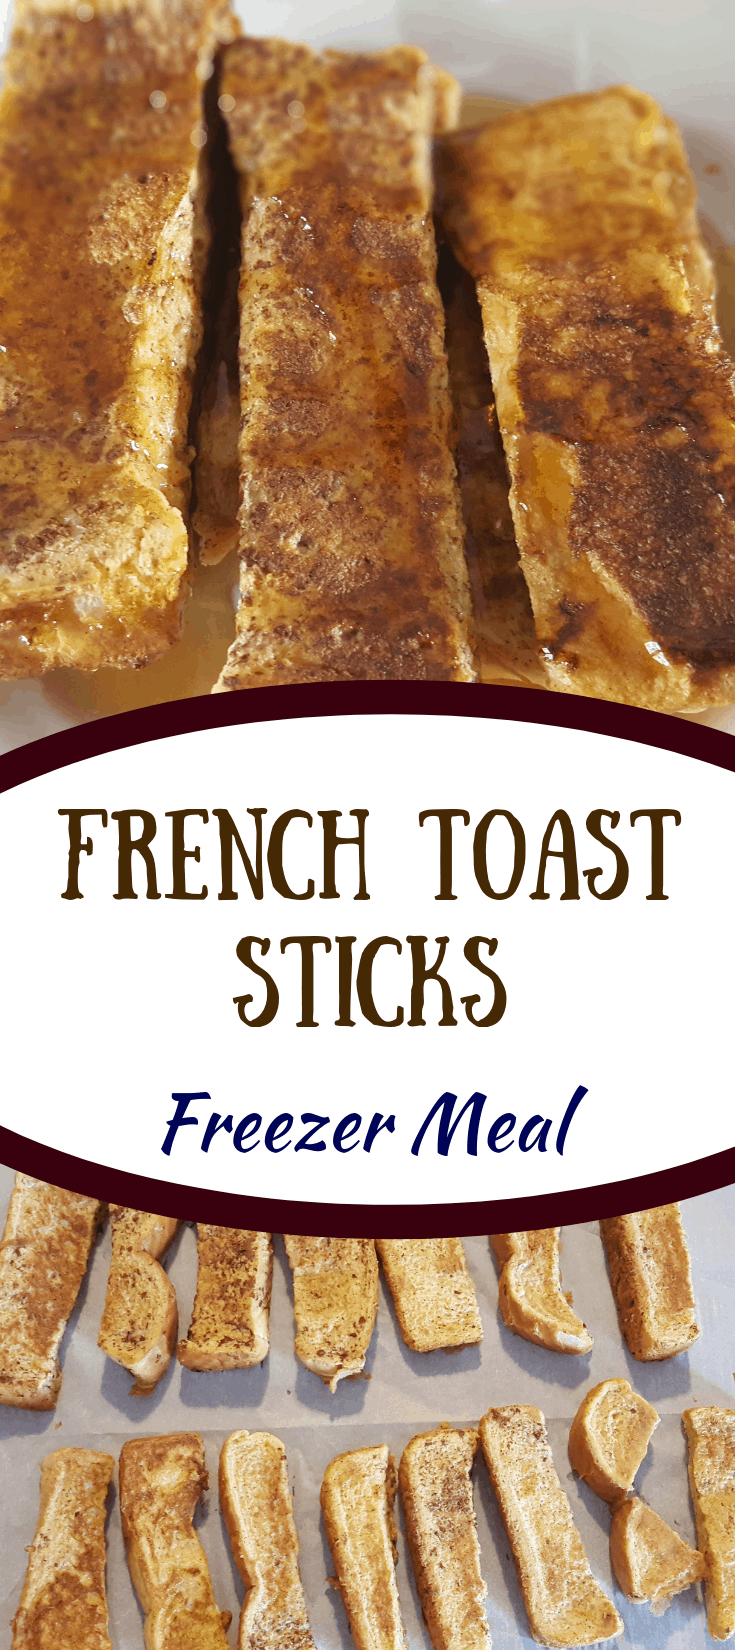 pin image "French Toast Sticks Freezer Meal"